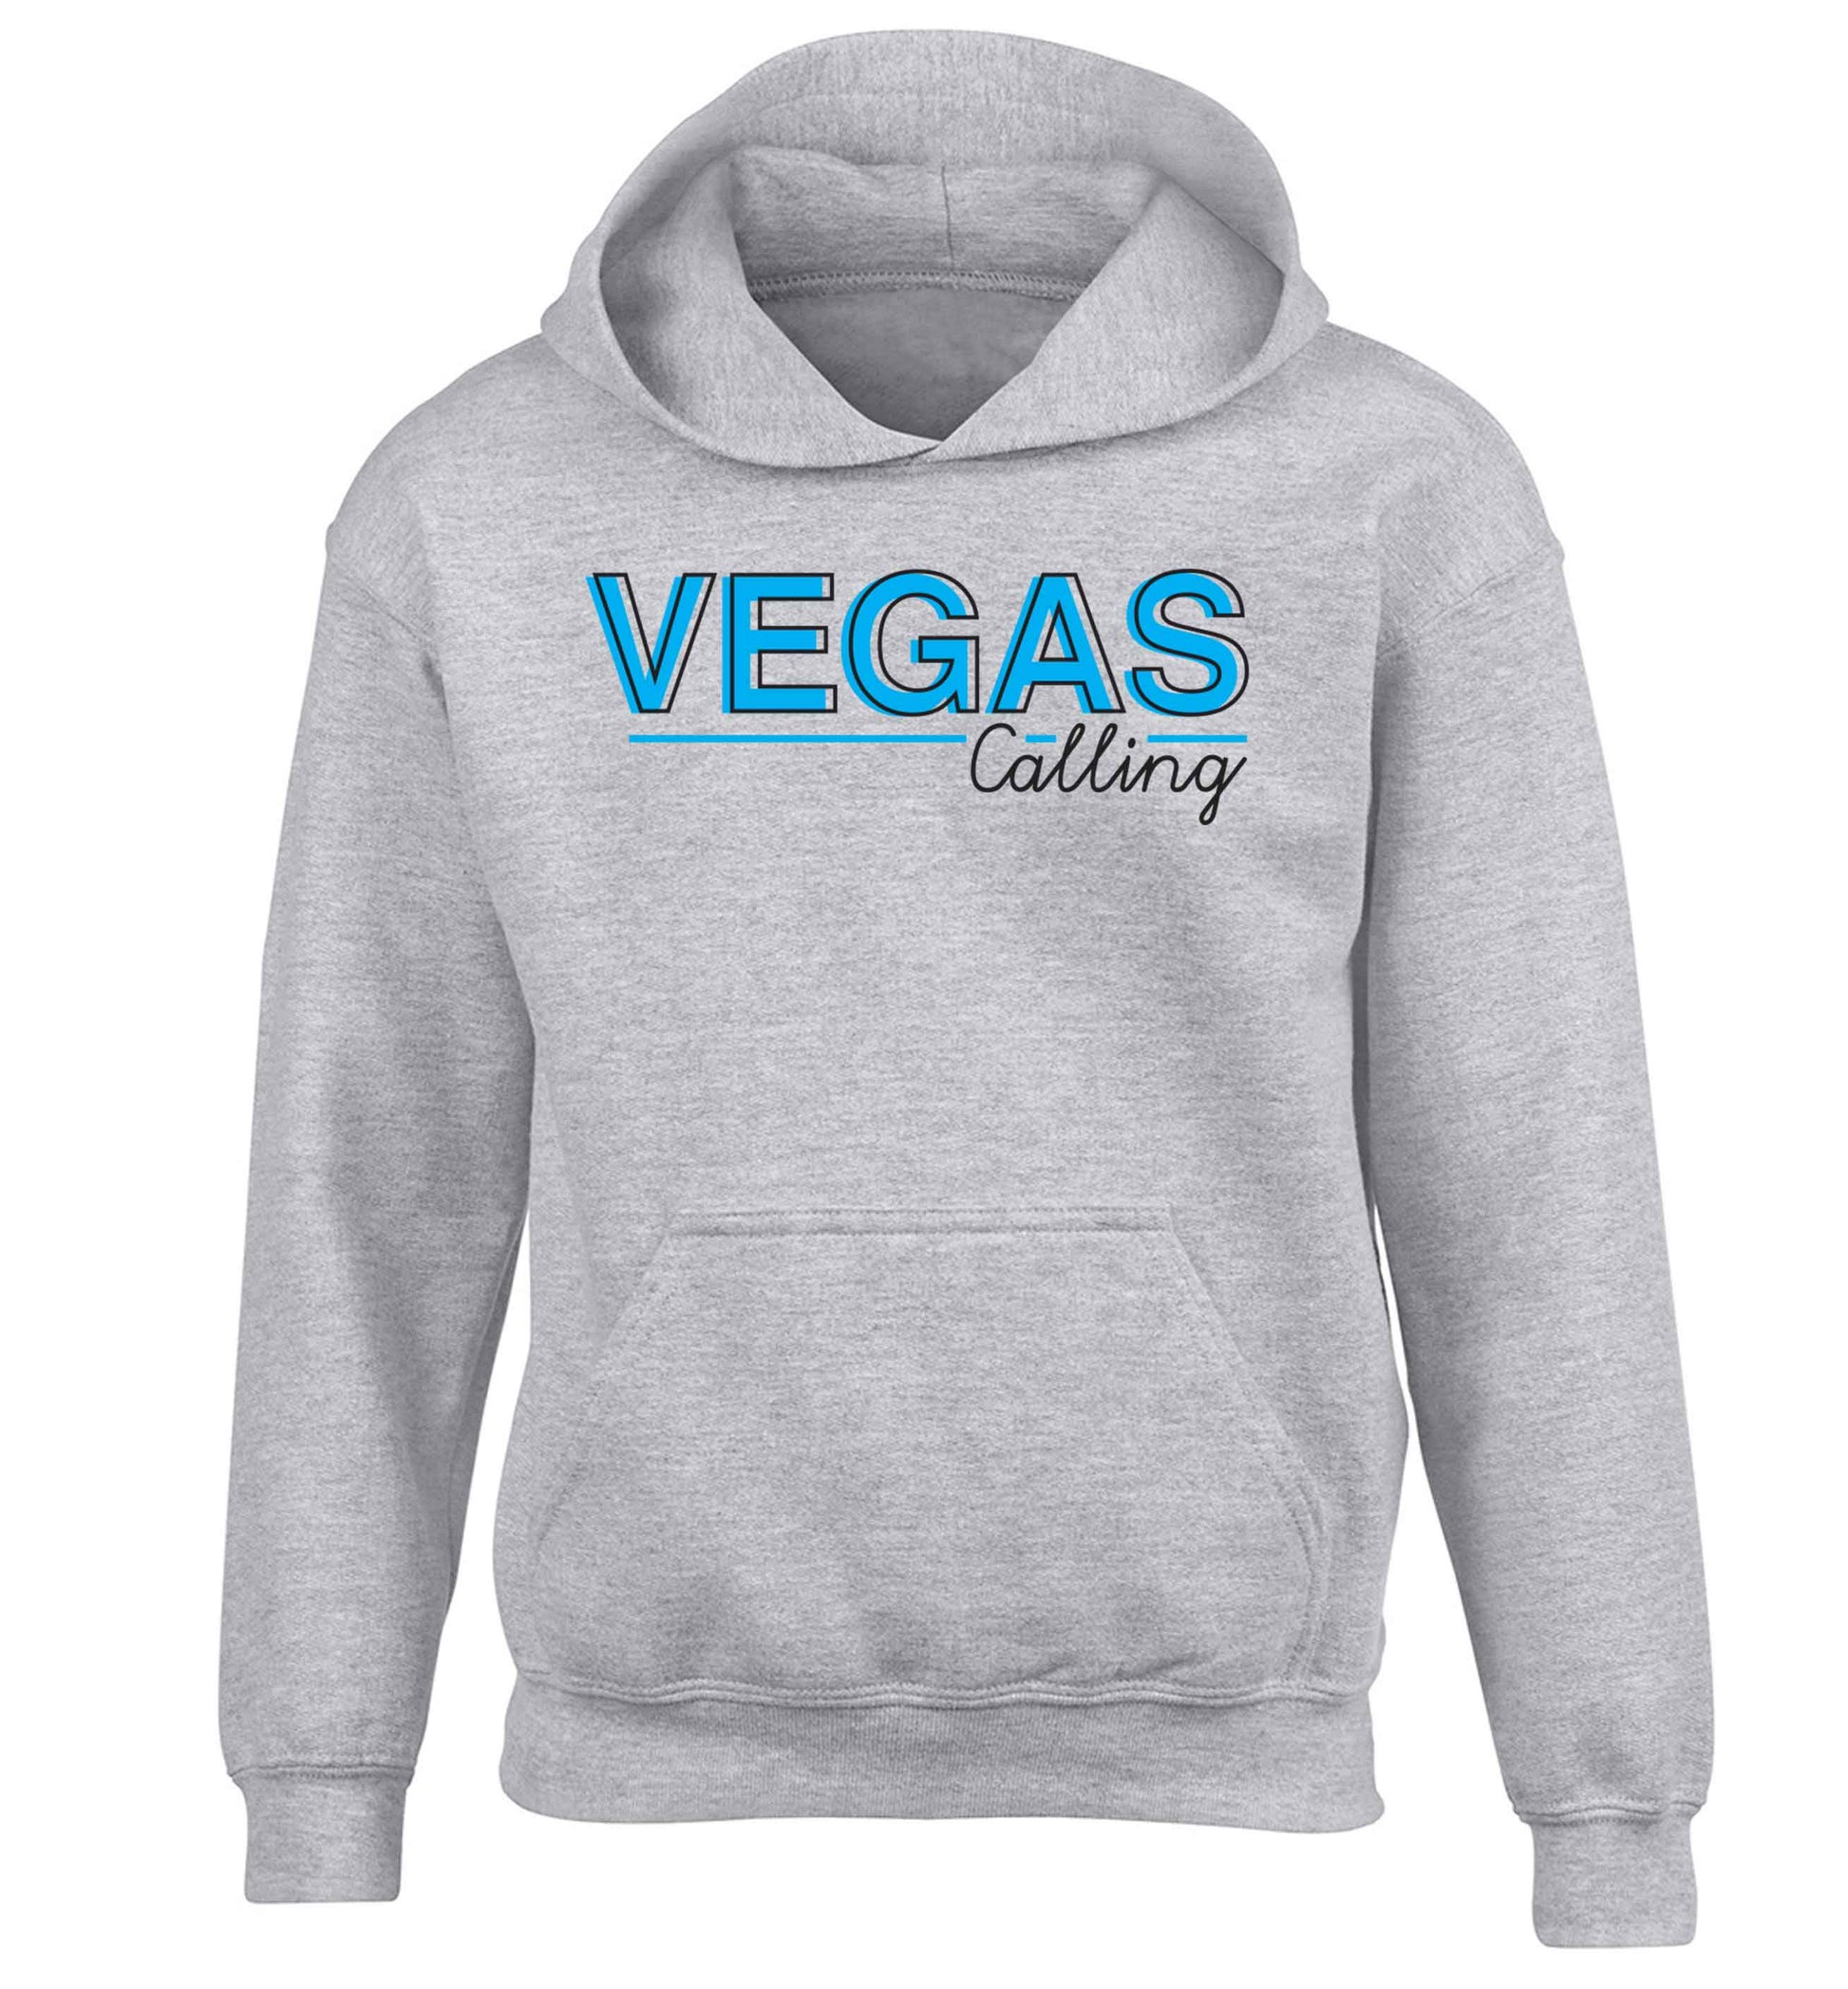 Vegas calling children's grey hoodie 12-13 Years